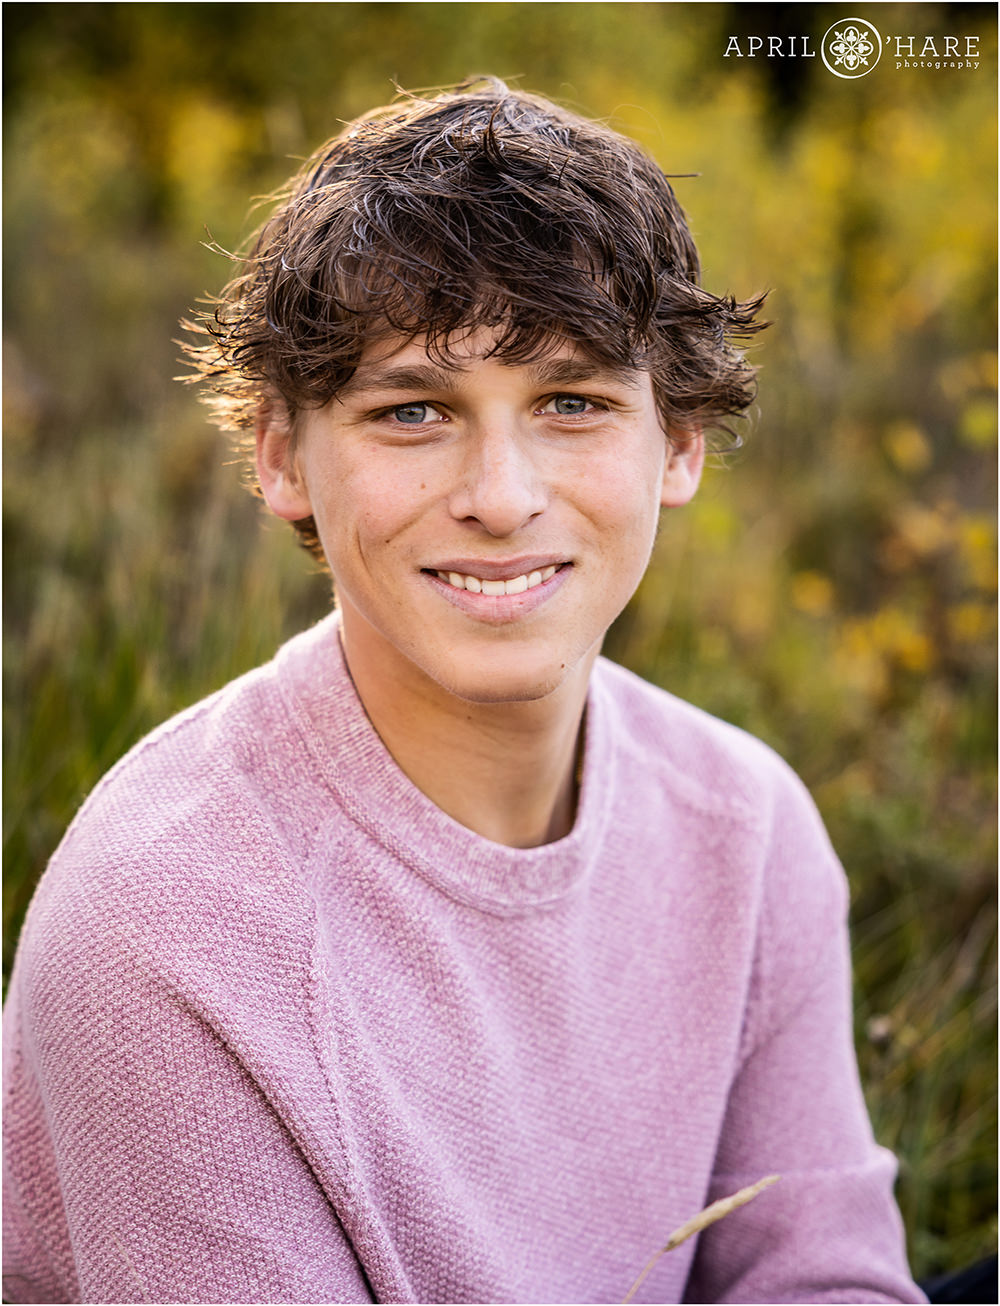 Yearbook photo for High school senior boy in Evergreen Colorado